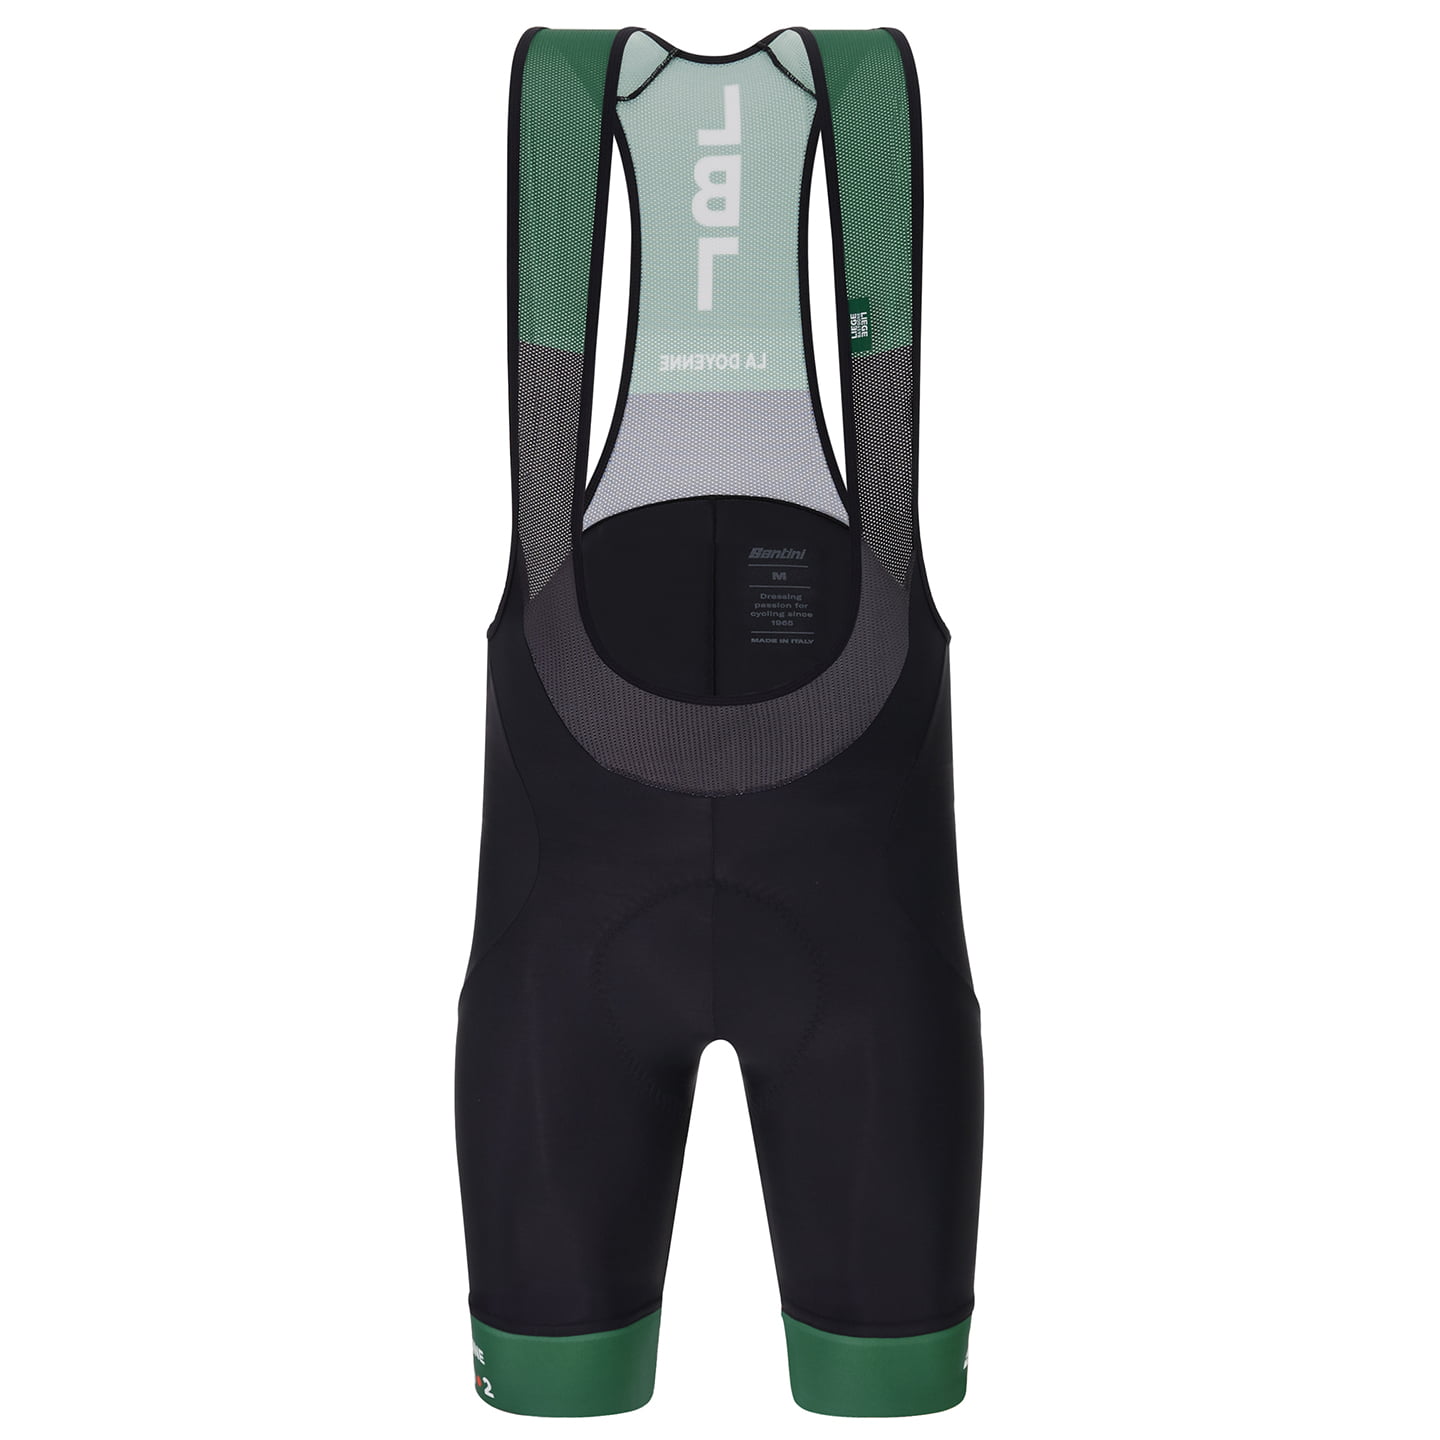 SANTINI Liege-Bastogne-Liege 2023 Bib Shorts, for men, size L, Cycle shorts, Cycling clothing